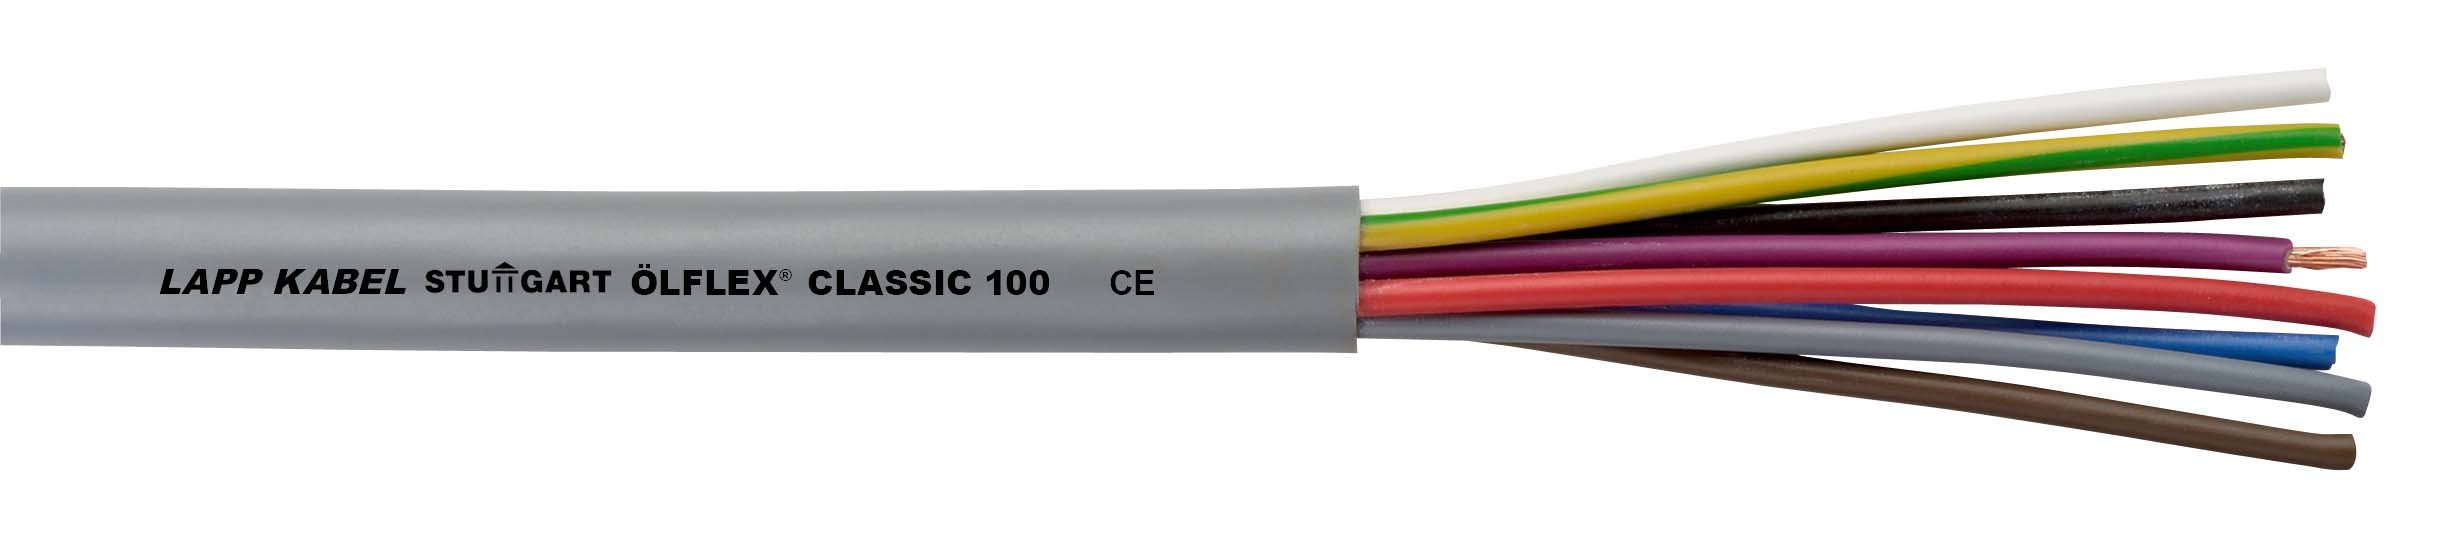 ÖLFLEX CLASSIC 100 3G1,5 00100644 R100 